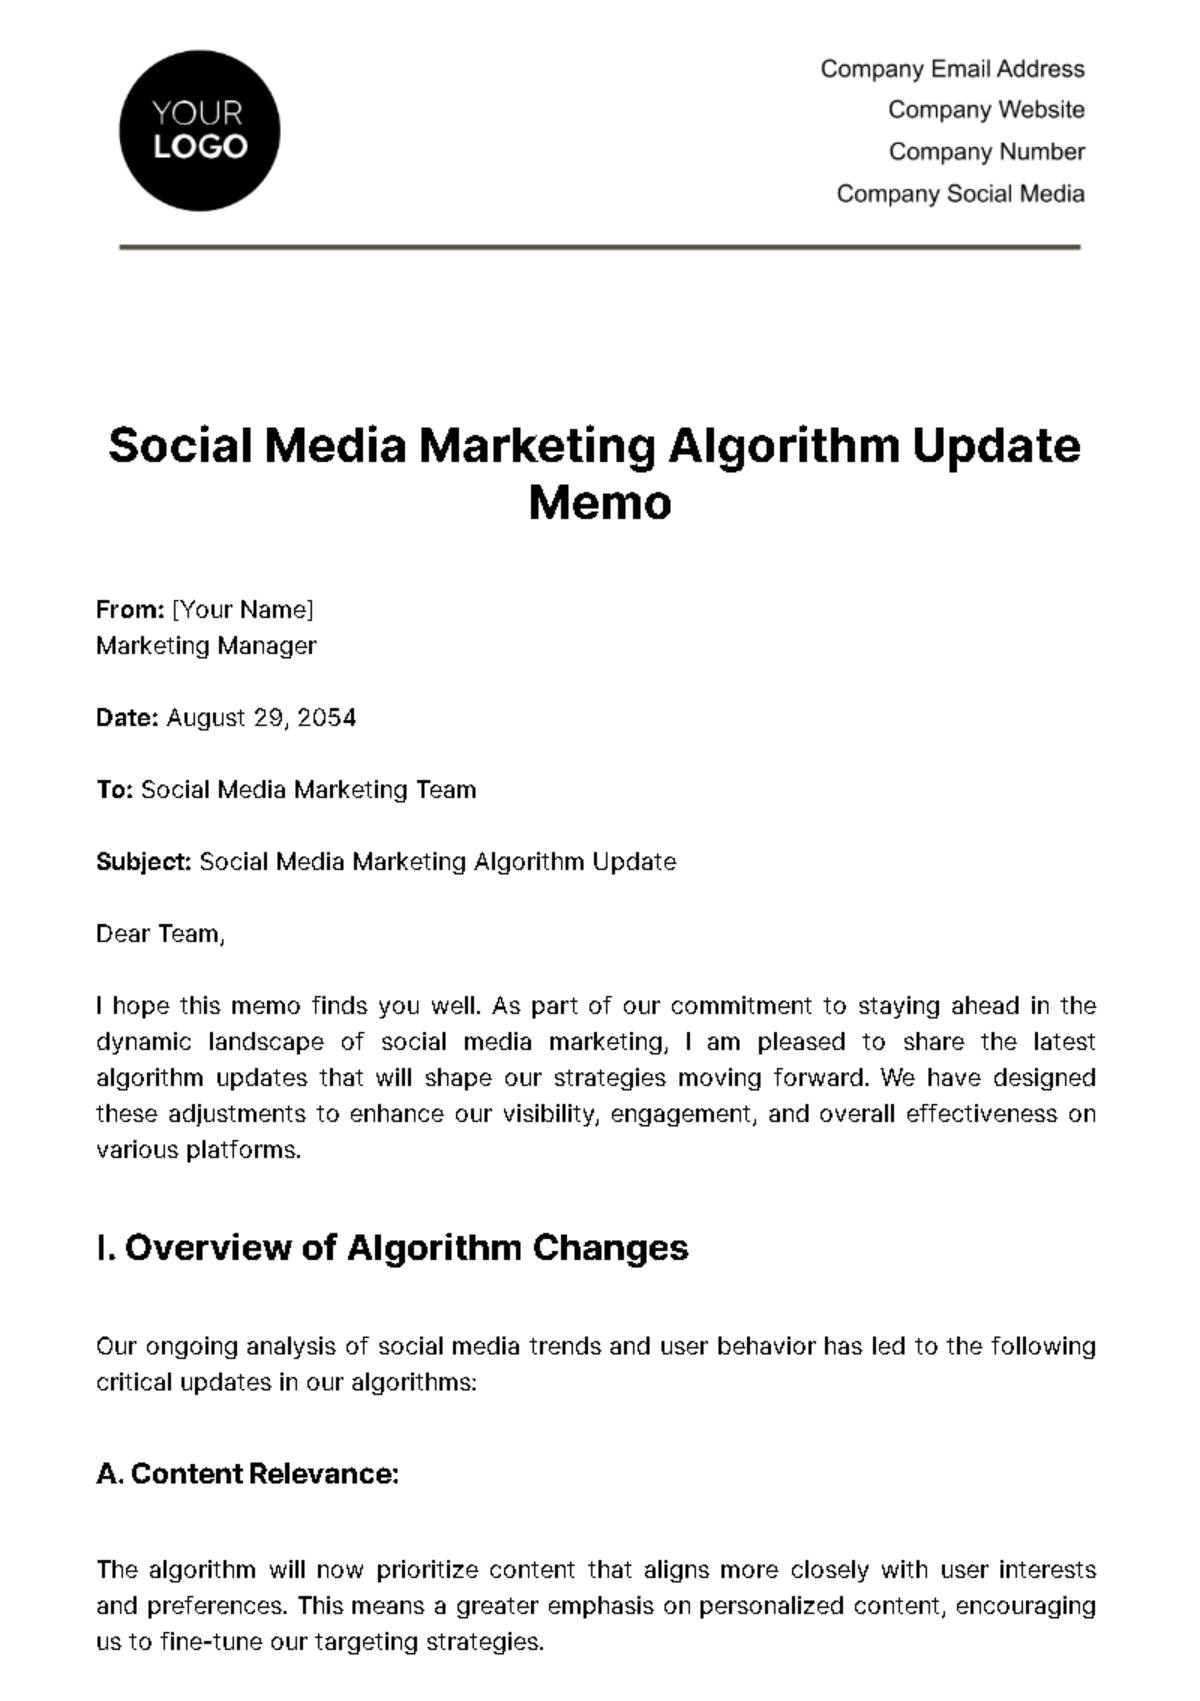 Free Social Media Marketing Algorithm Update Memo Template